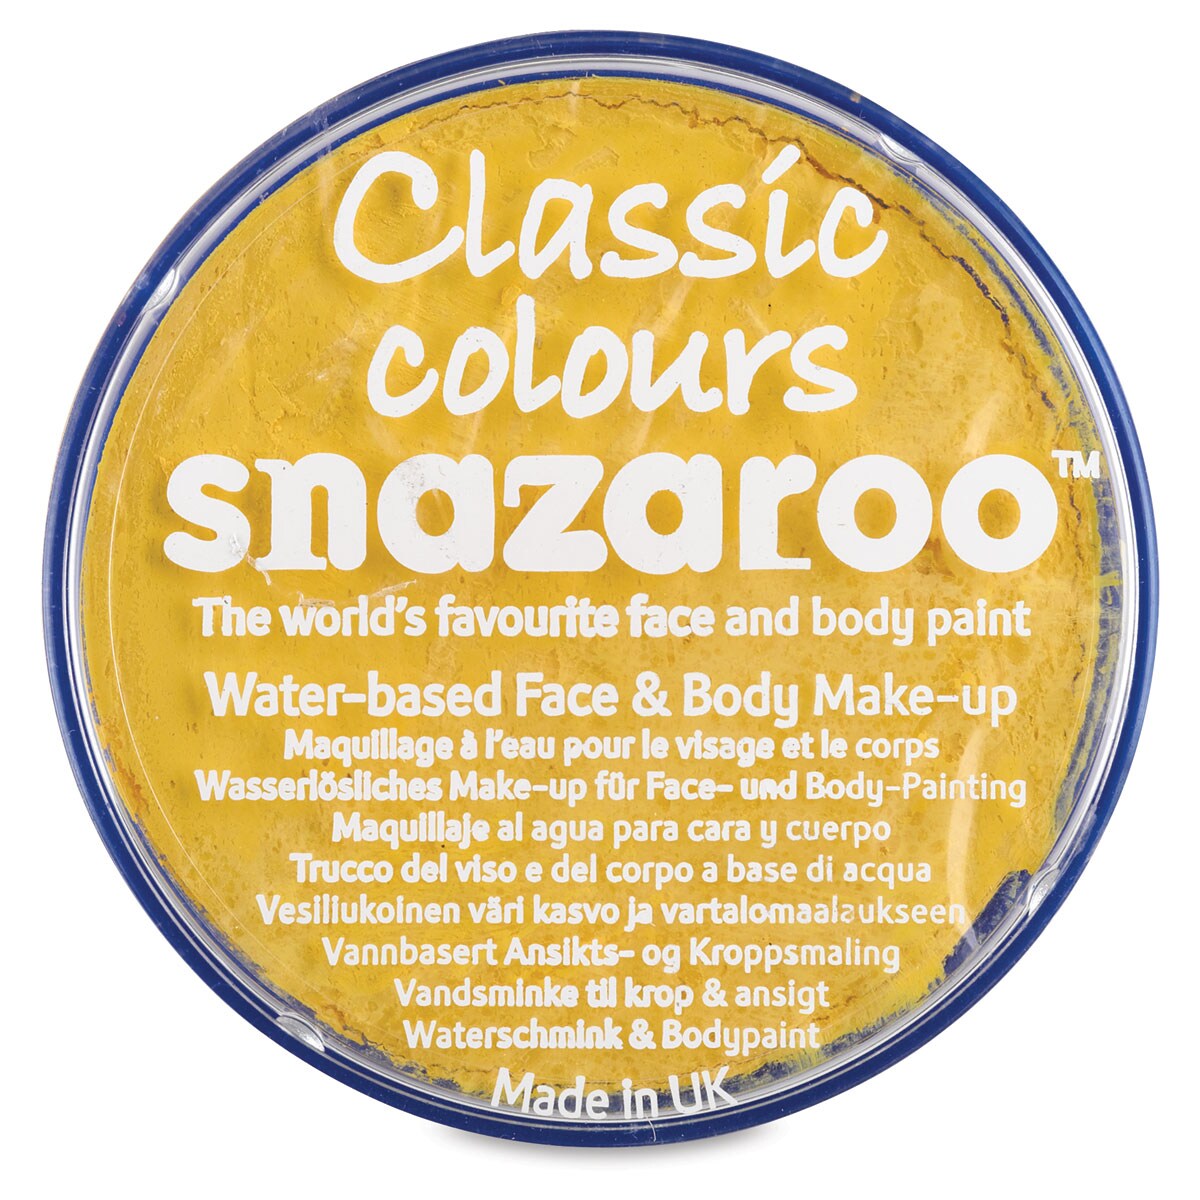 Snazaroo Classic Face Paint, 18ml, Bright Yellow